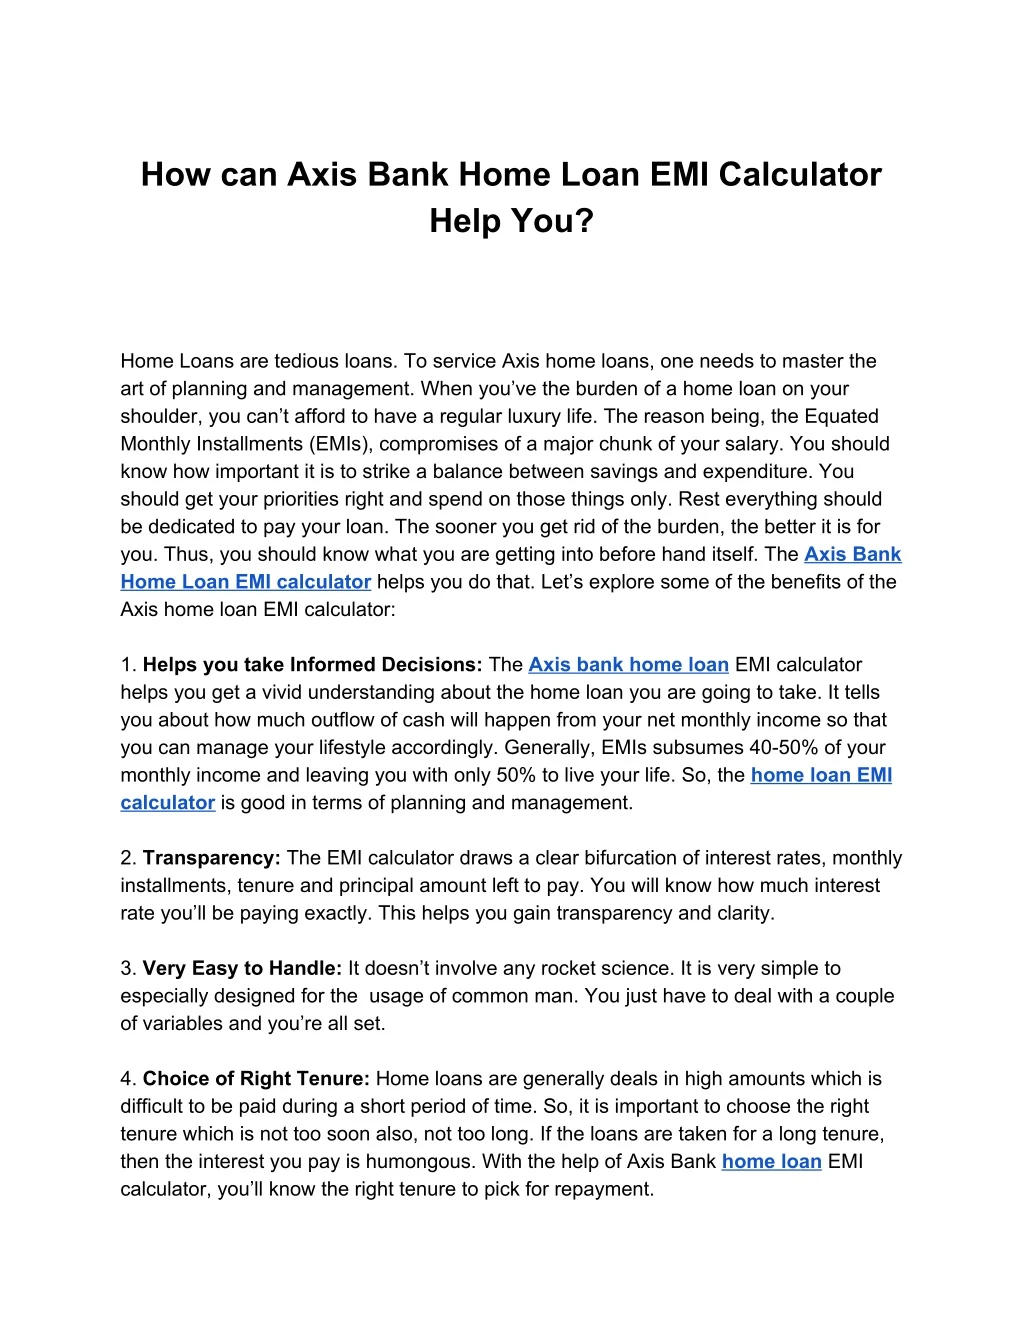 how can axis bank home loan emi calculator help